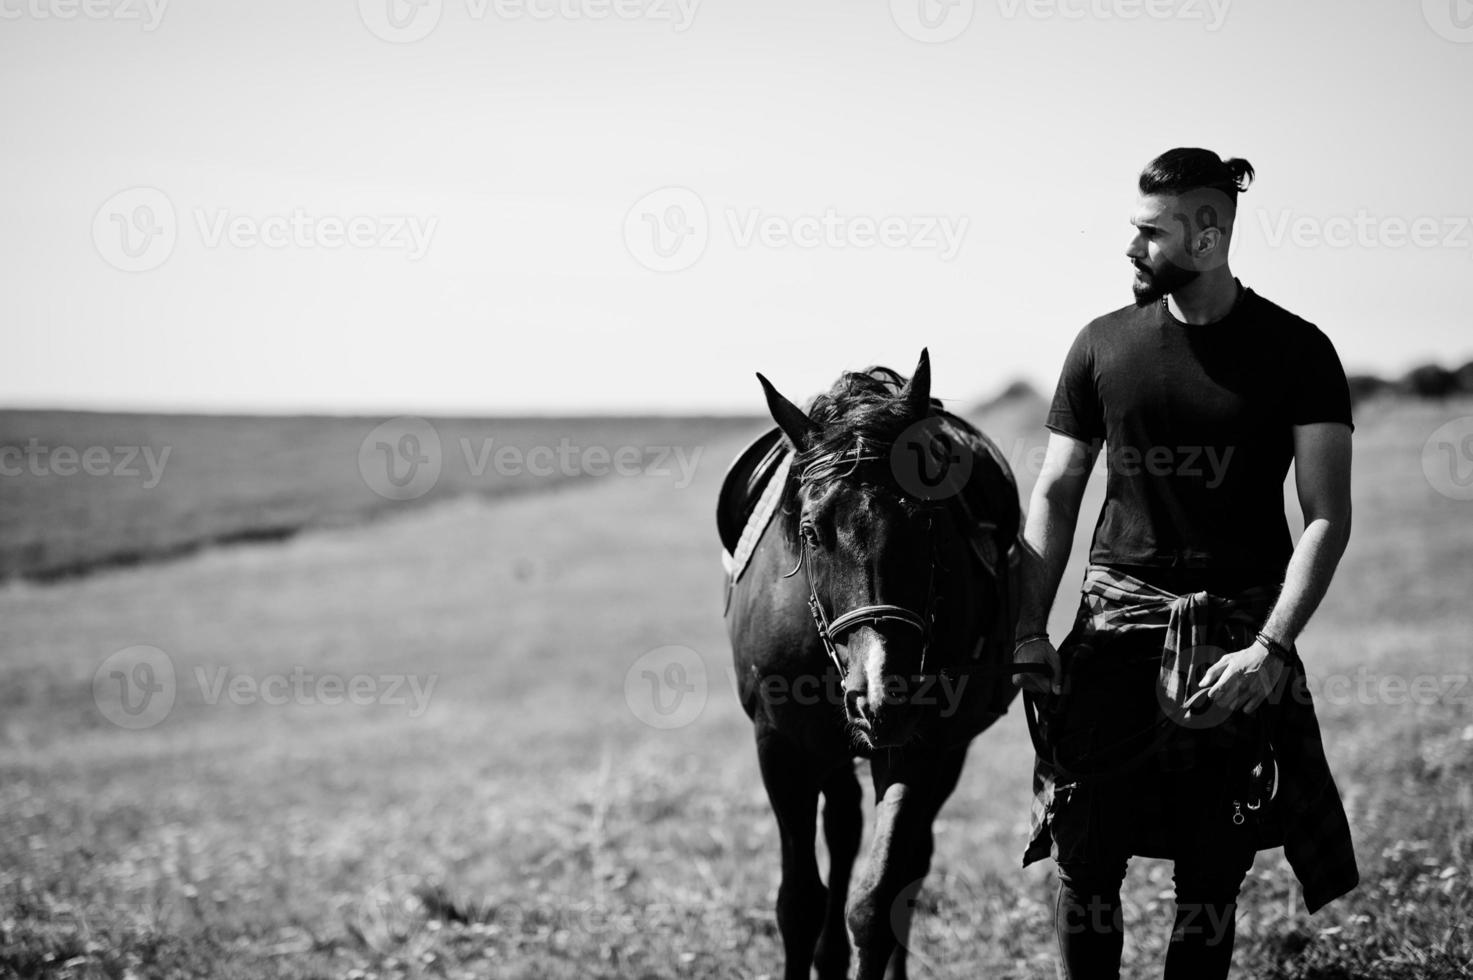 homme arabe à barbe haute en noir avec cheval arabe. photo